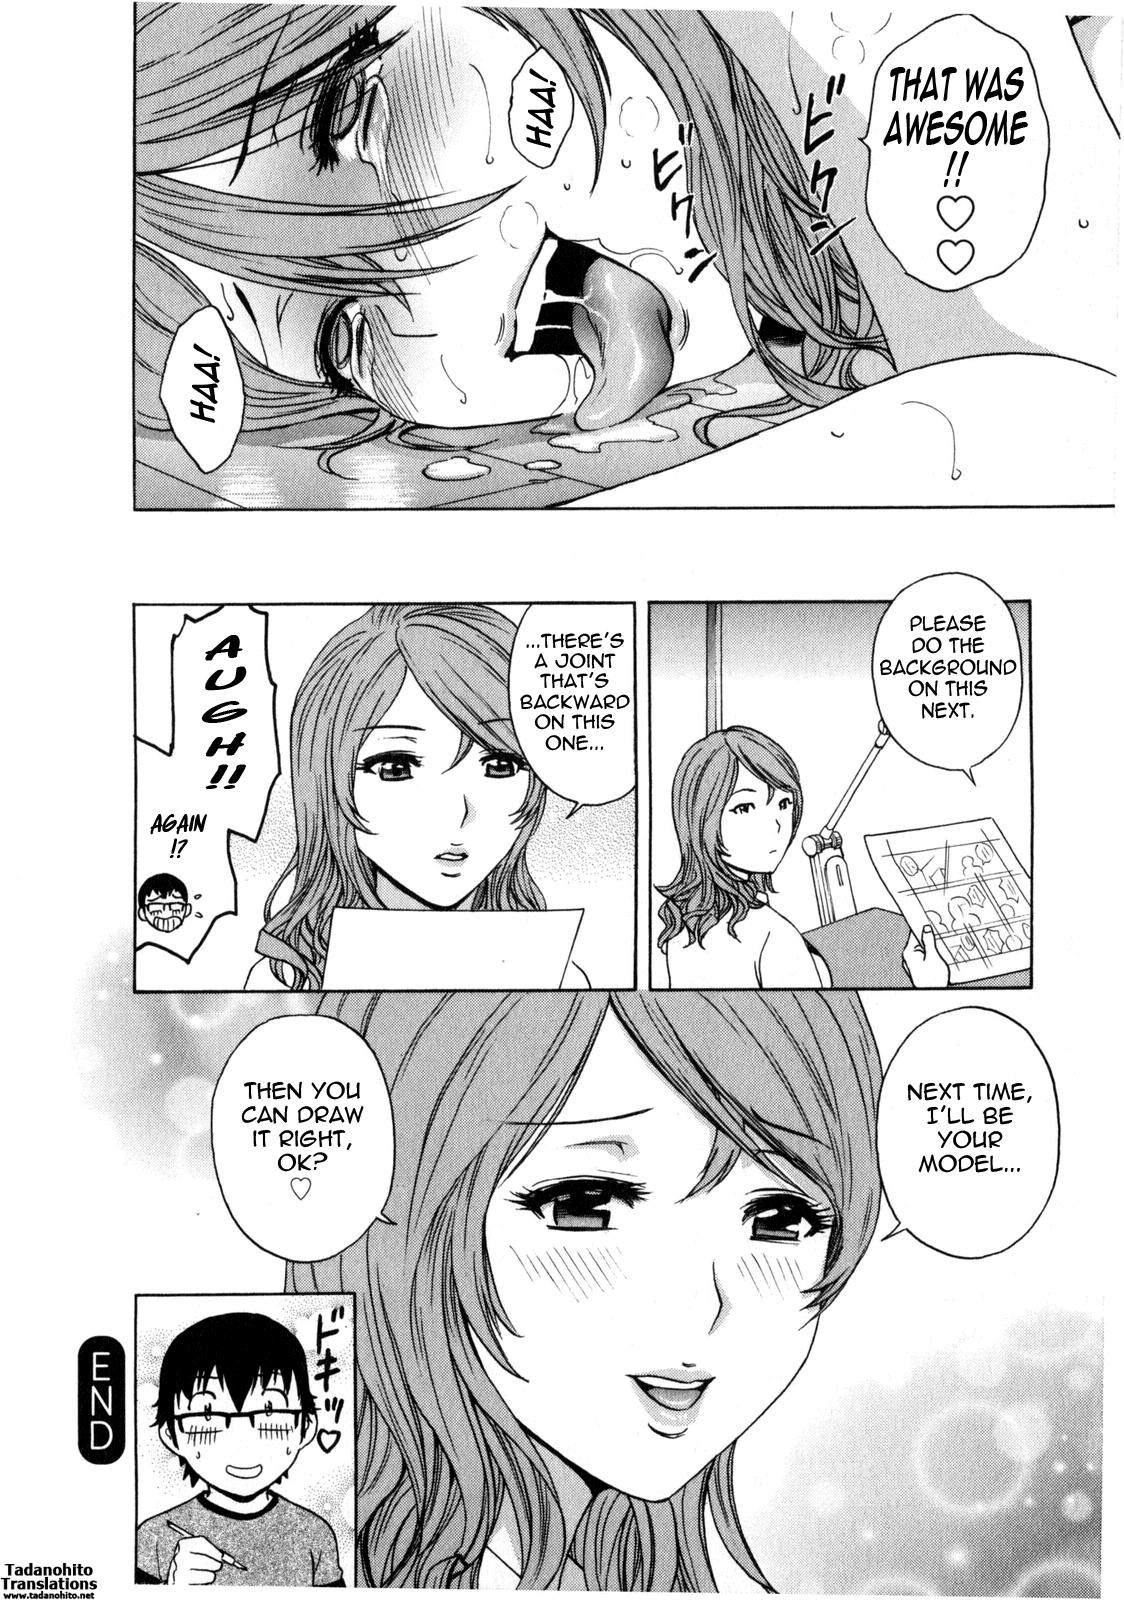 [Hidemaru] Life with Married Women Just Like a Manga 2 - Ch. 1-2 [English] {Tadanohito} 44